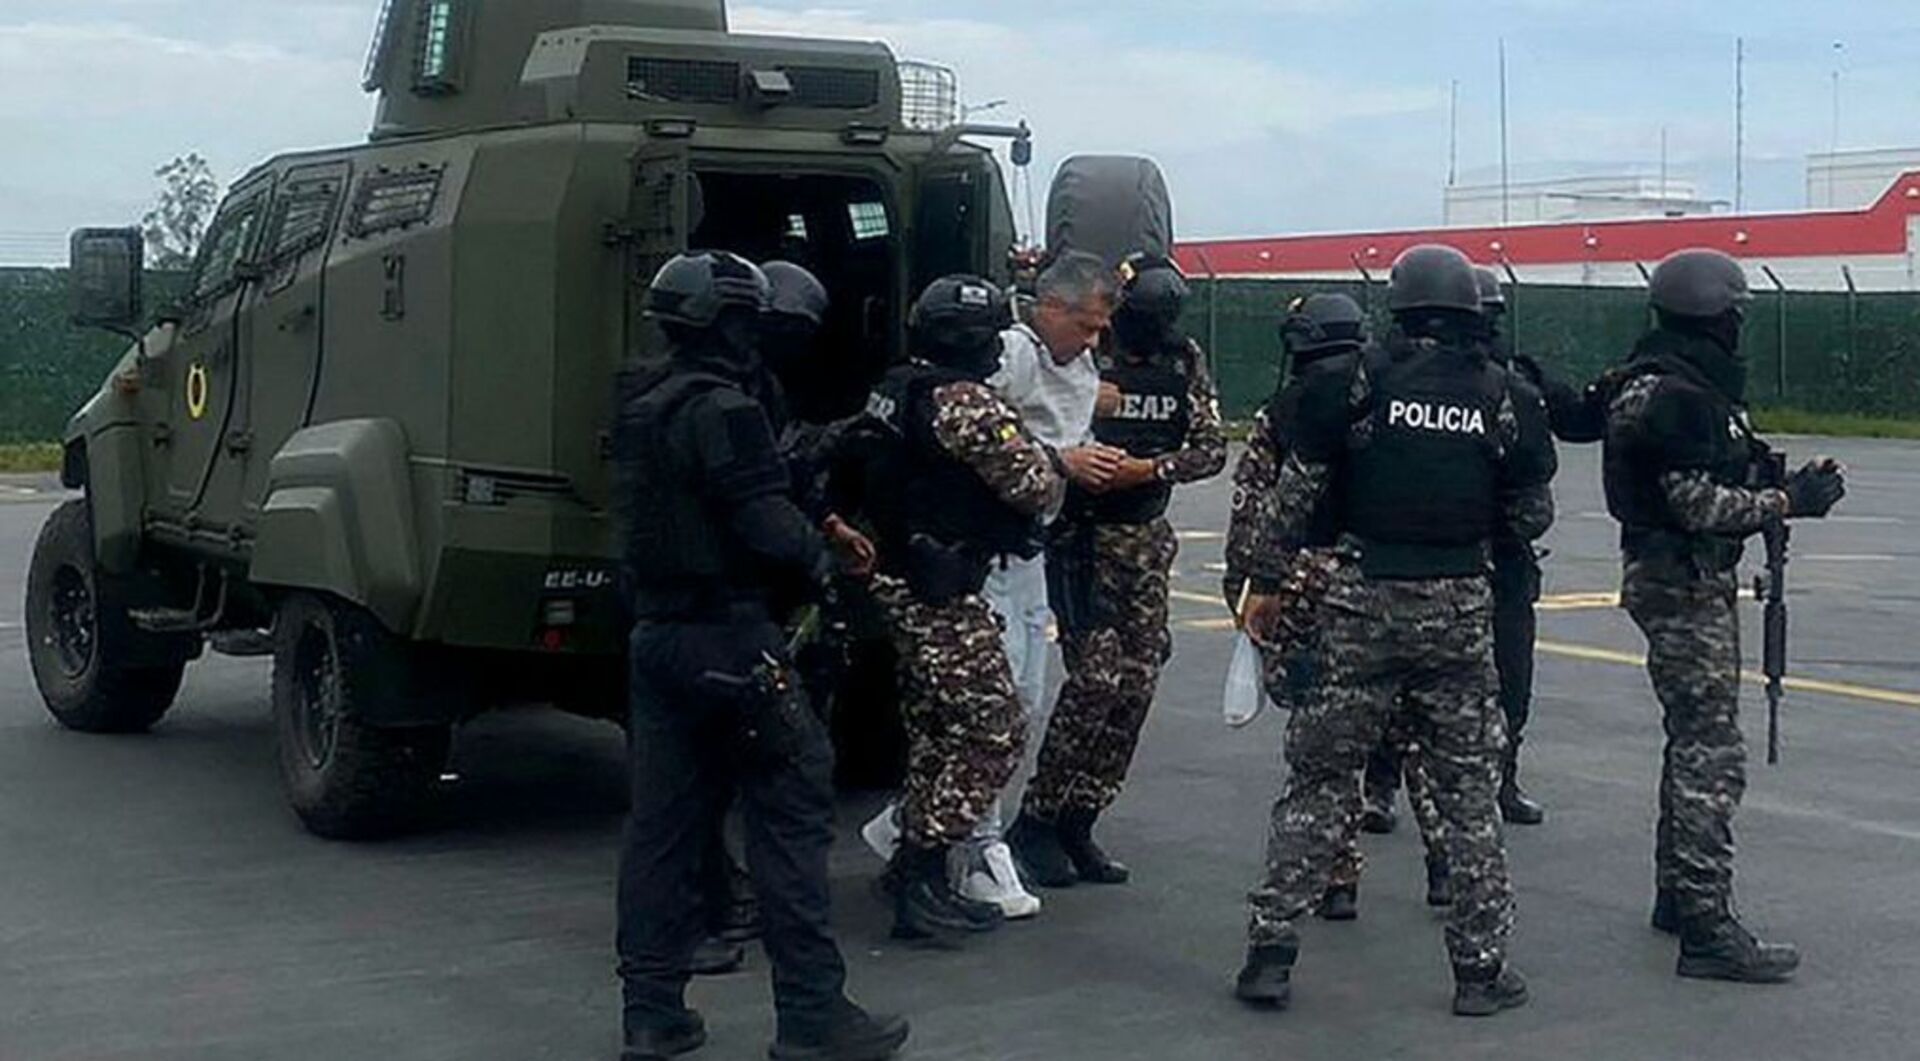 Ecuador ex-VP Jorge Glas hospitalised after capture from Mexico embassy | Politics News [Video]